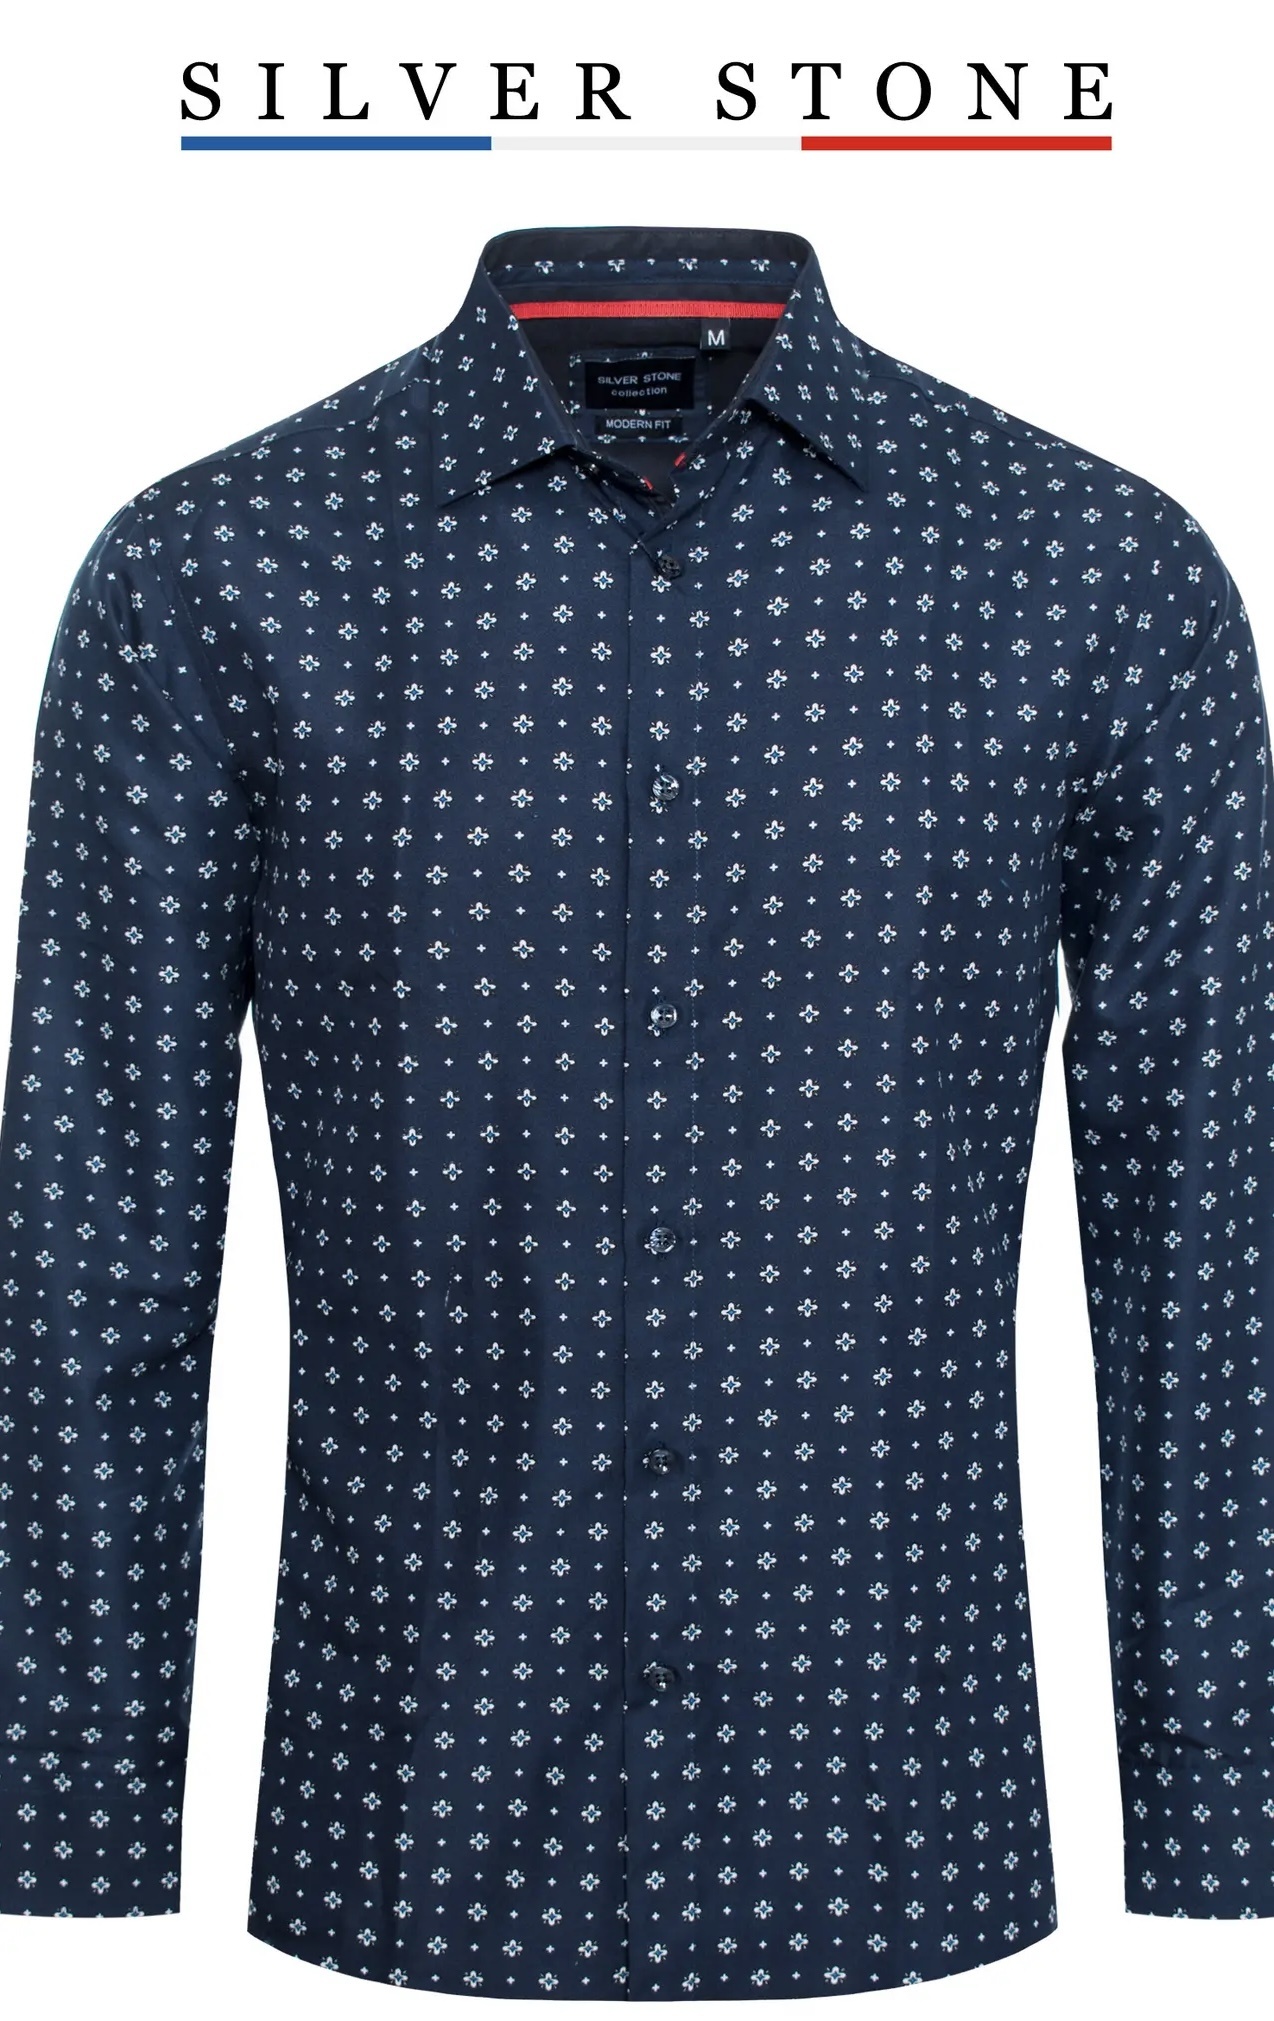 Urban Fitz Printed Button Down LS Cotton Shirt